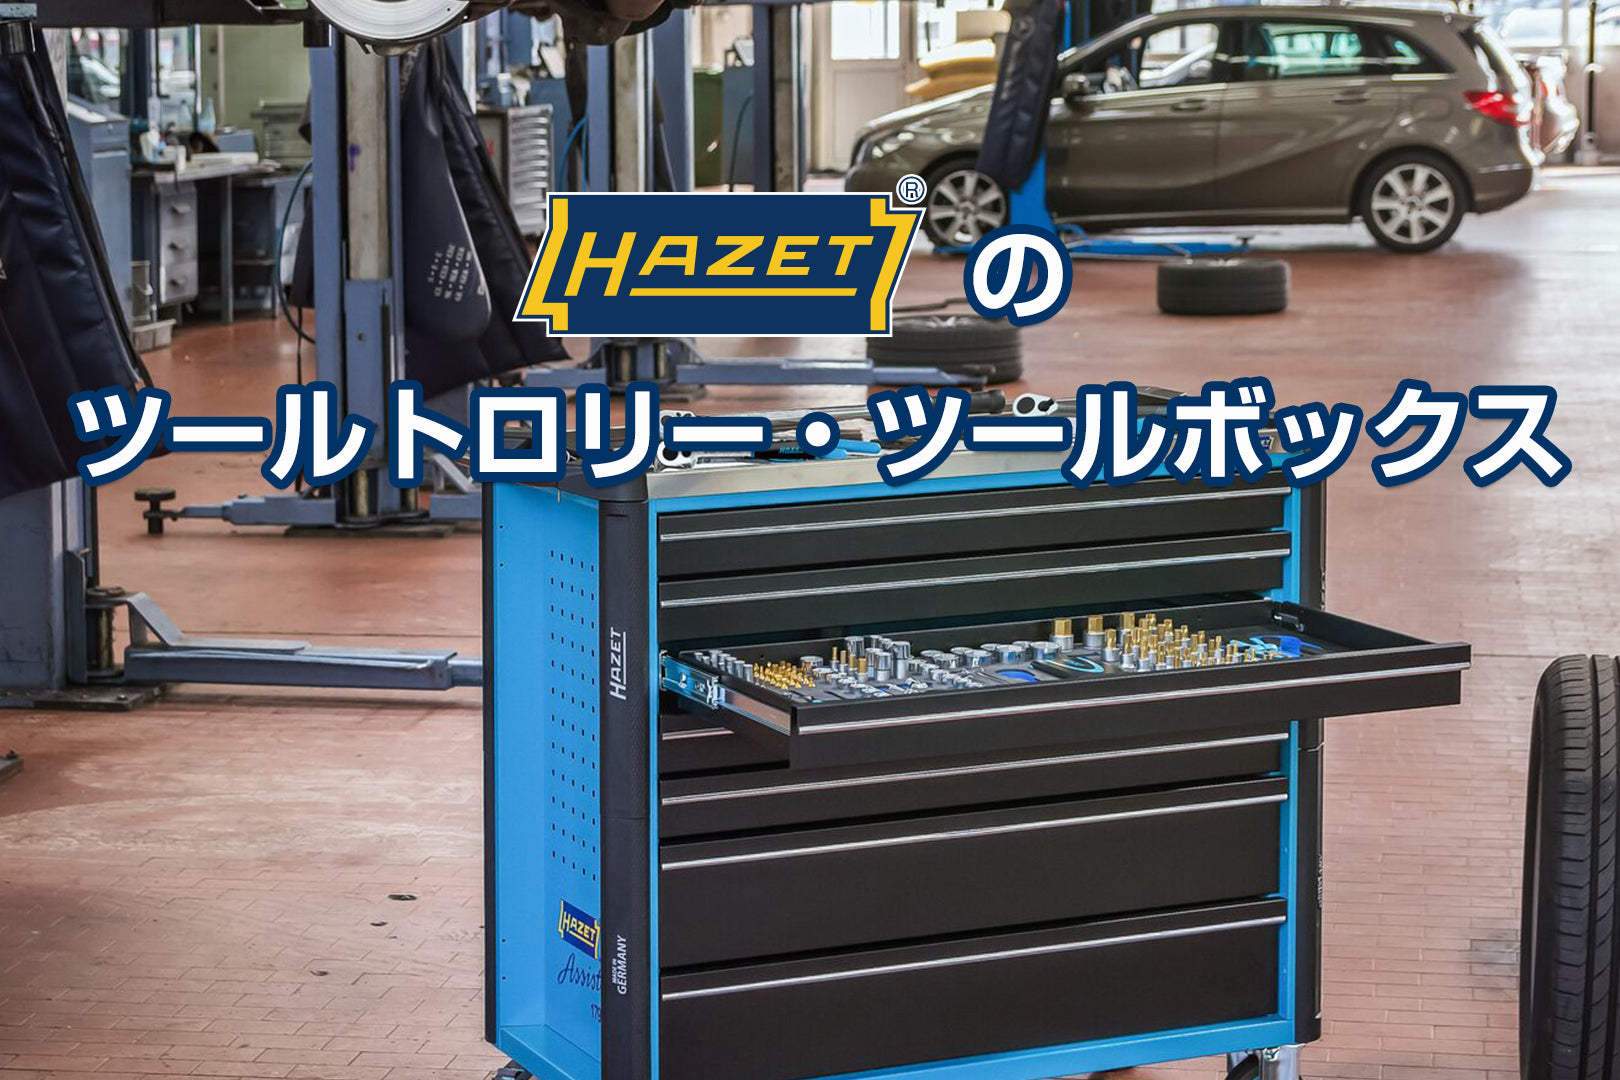 HAZET（ハゼット）ツールボックス – HAZET Japan